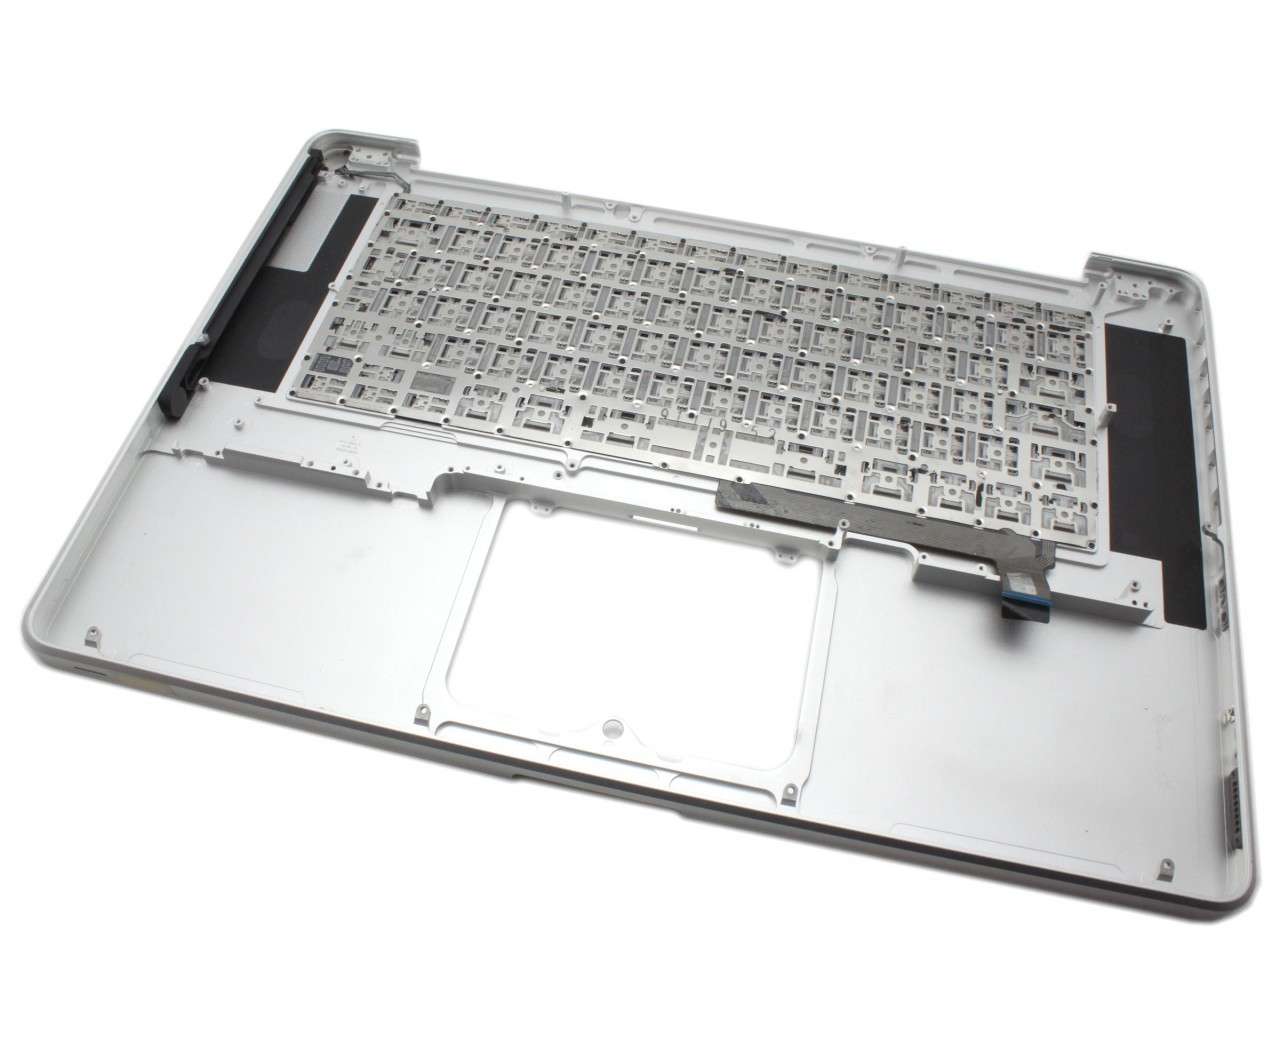 Tastatura Apple MacBook Pro 15 MD322LL A Neagra cu Palmrest Argintiu Refurbished Apple Apple